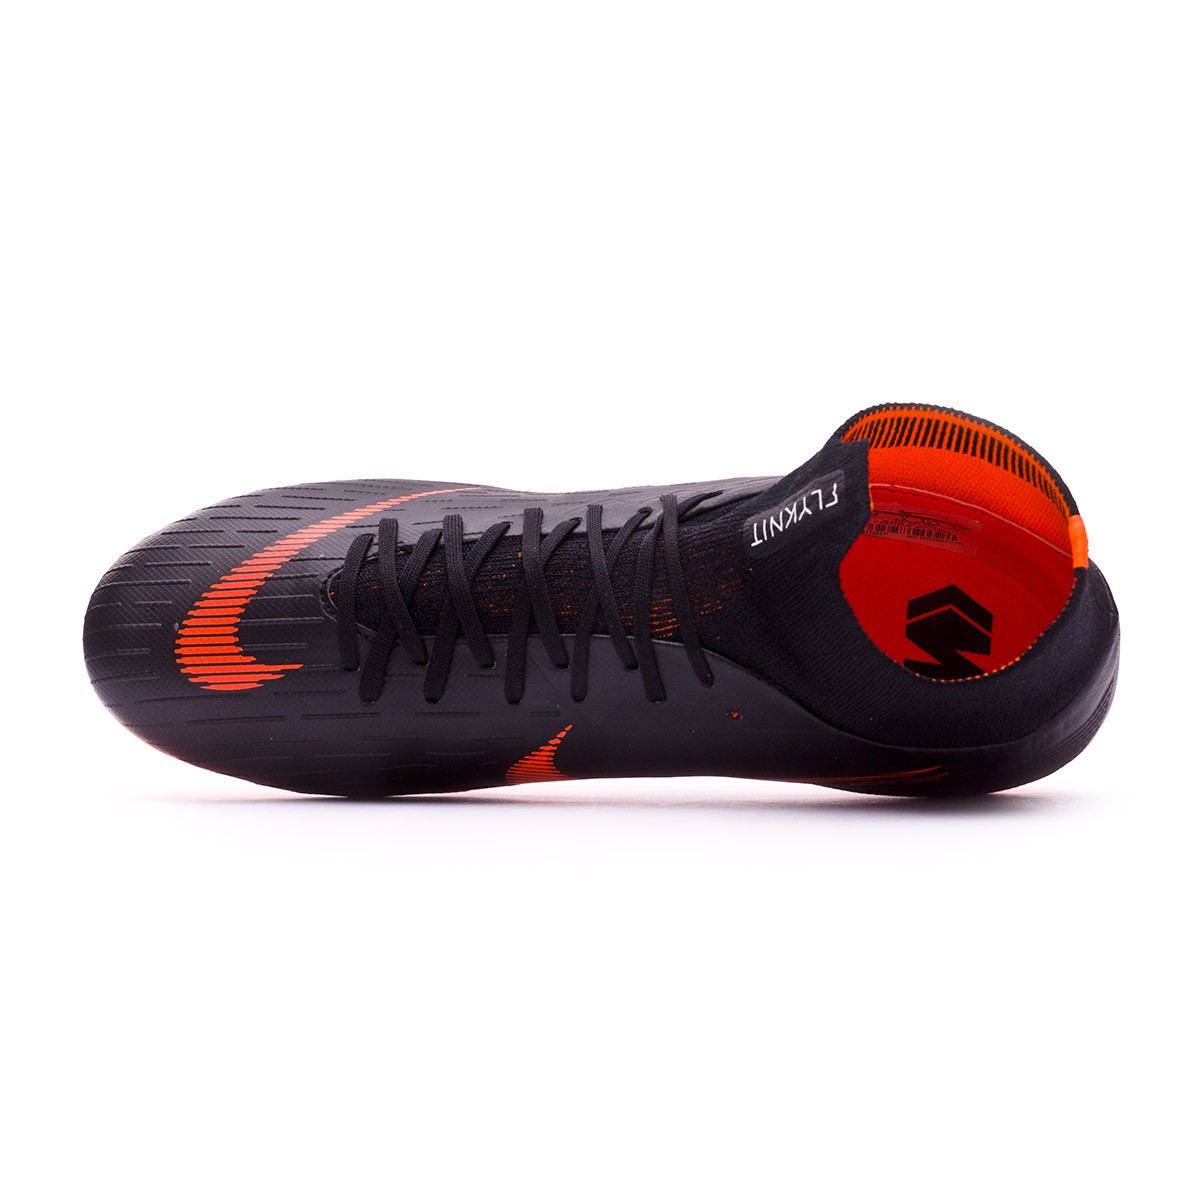 Chaussure de foot Nike Mercurial Superfly VI Academy LVL